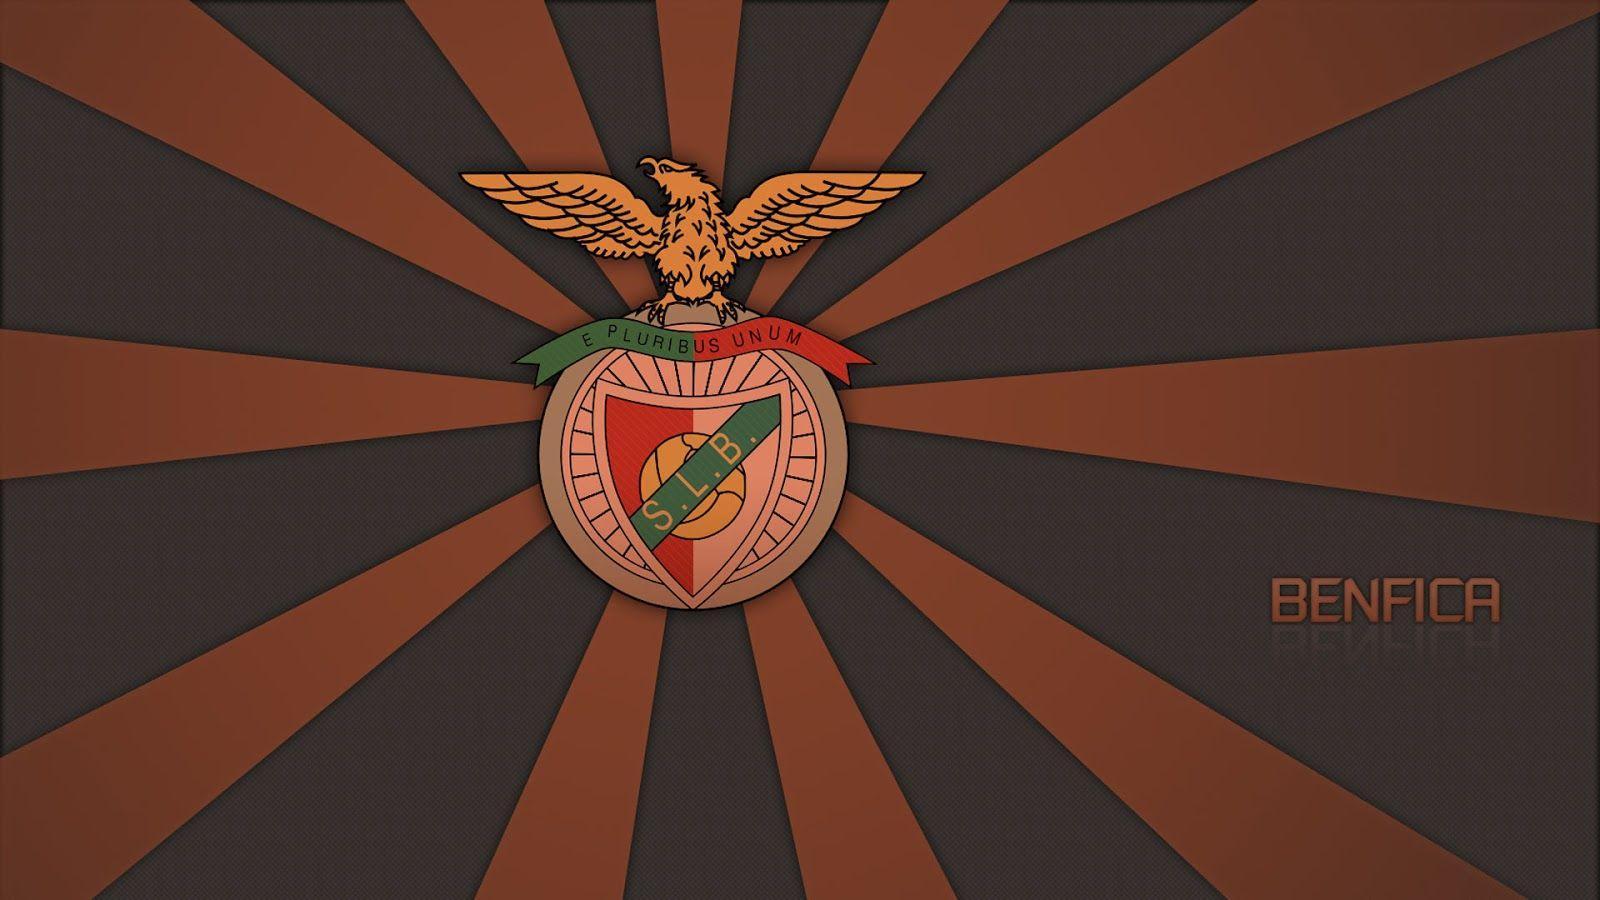 trololo blogg: Wallpaper Benfica Free